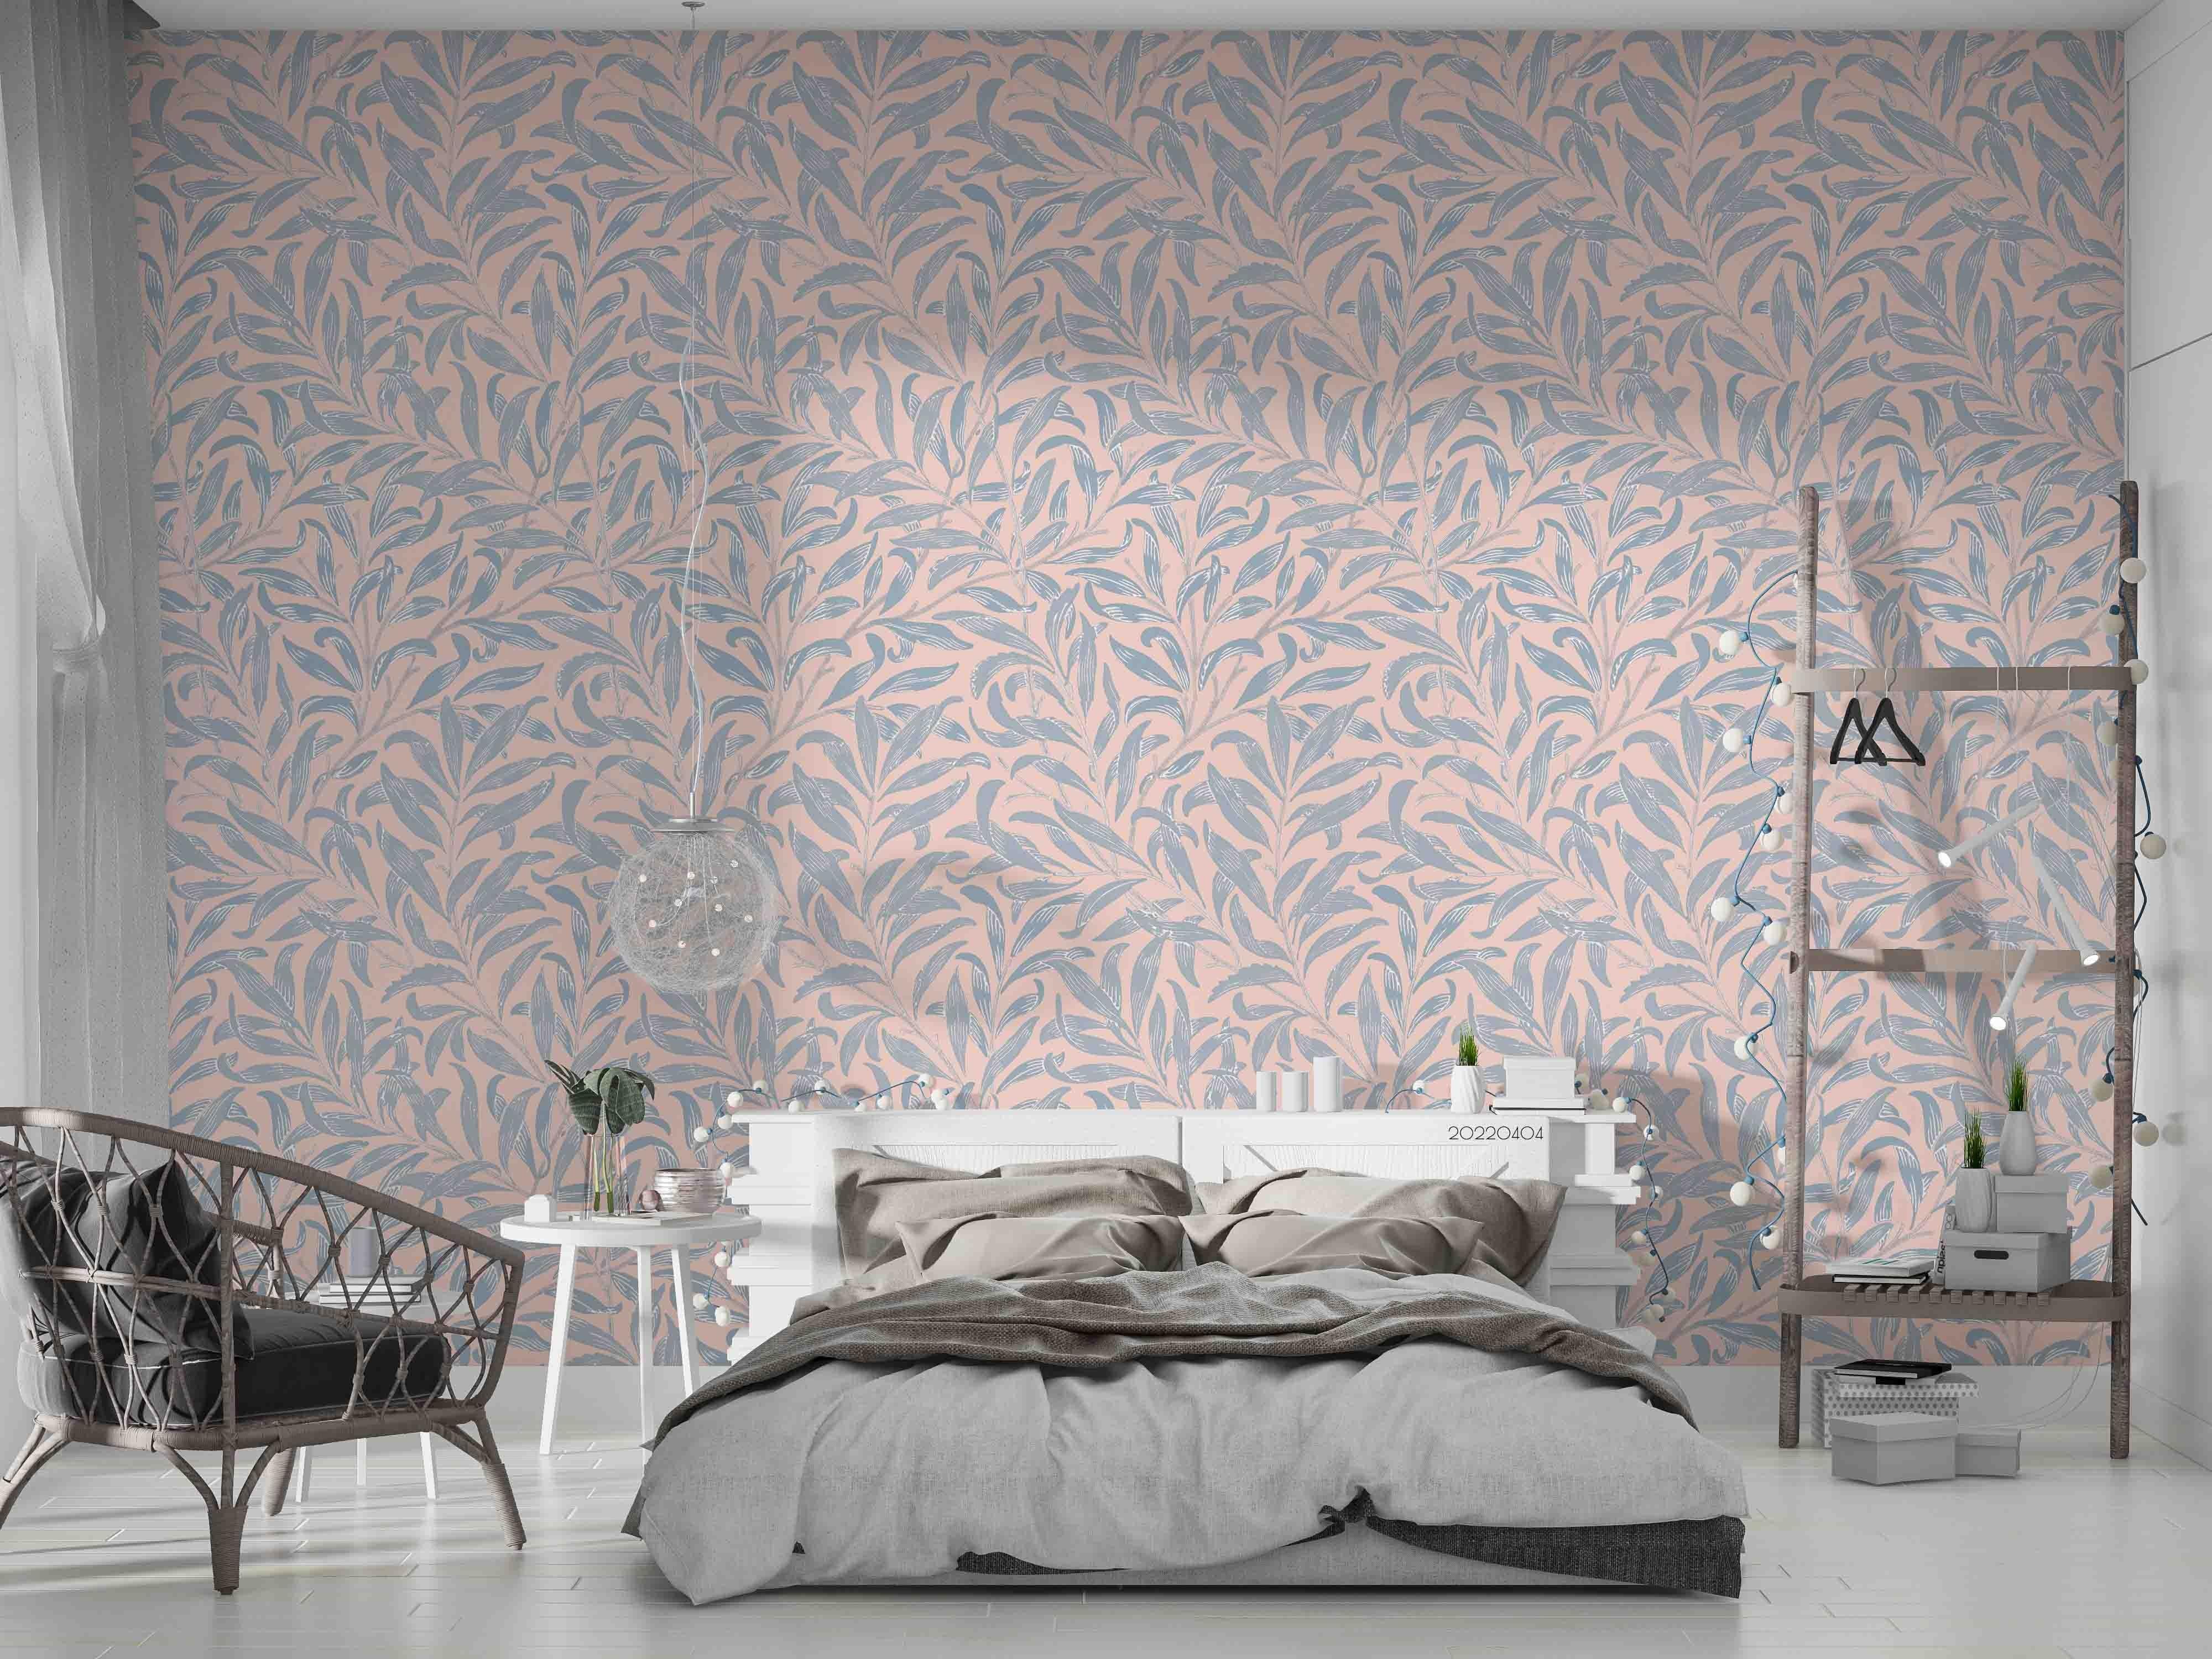 3D Vintage Leaves Pink Background Wall Mural Wallpaper GD 3959- Jess Art Decoration